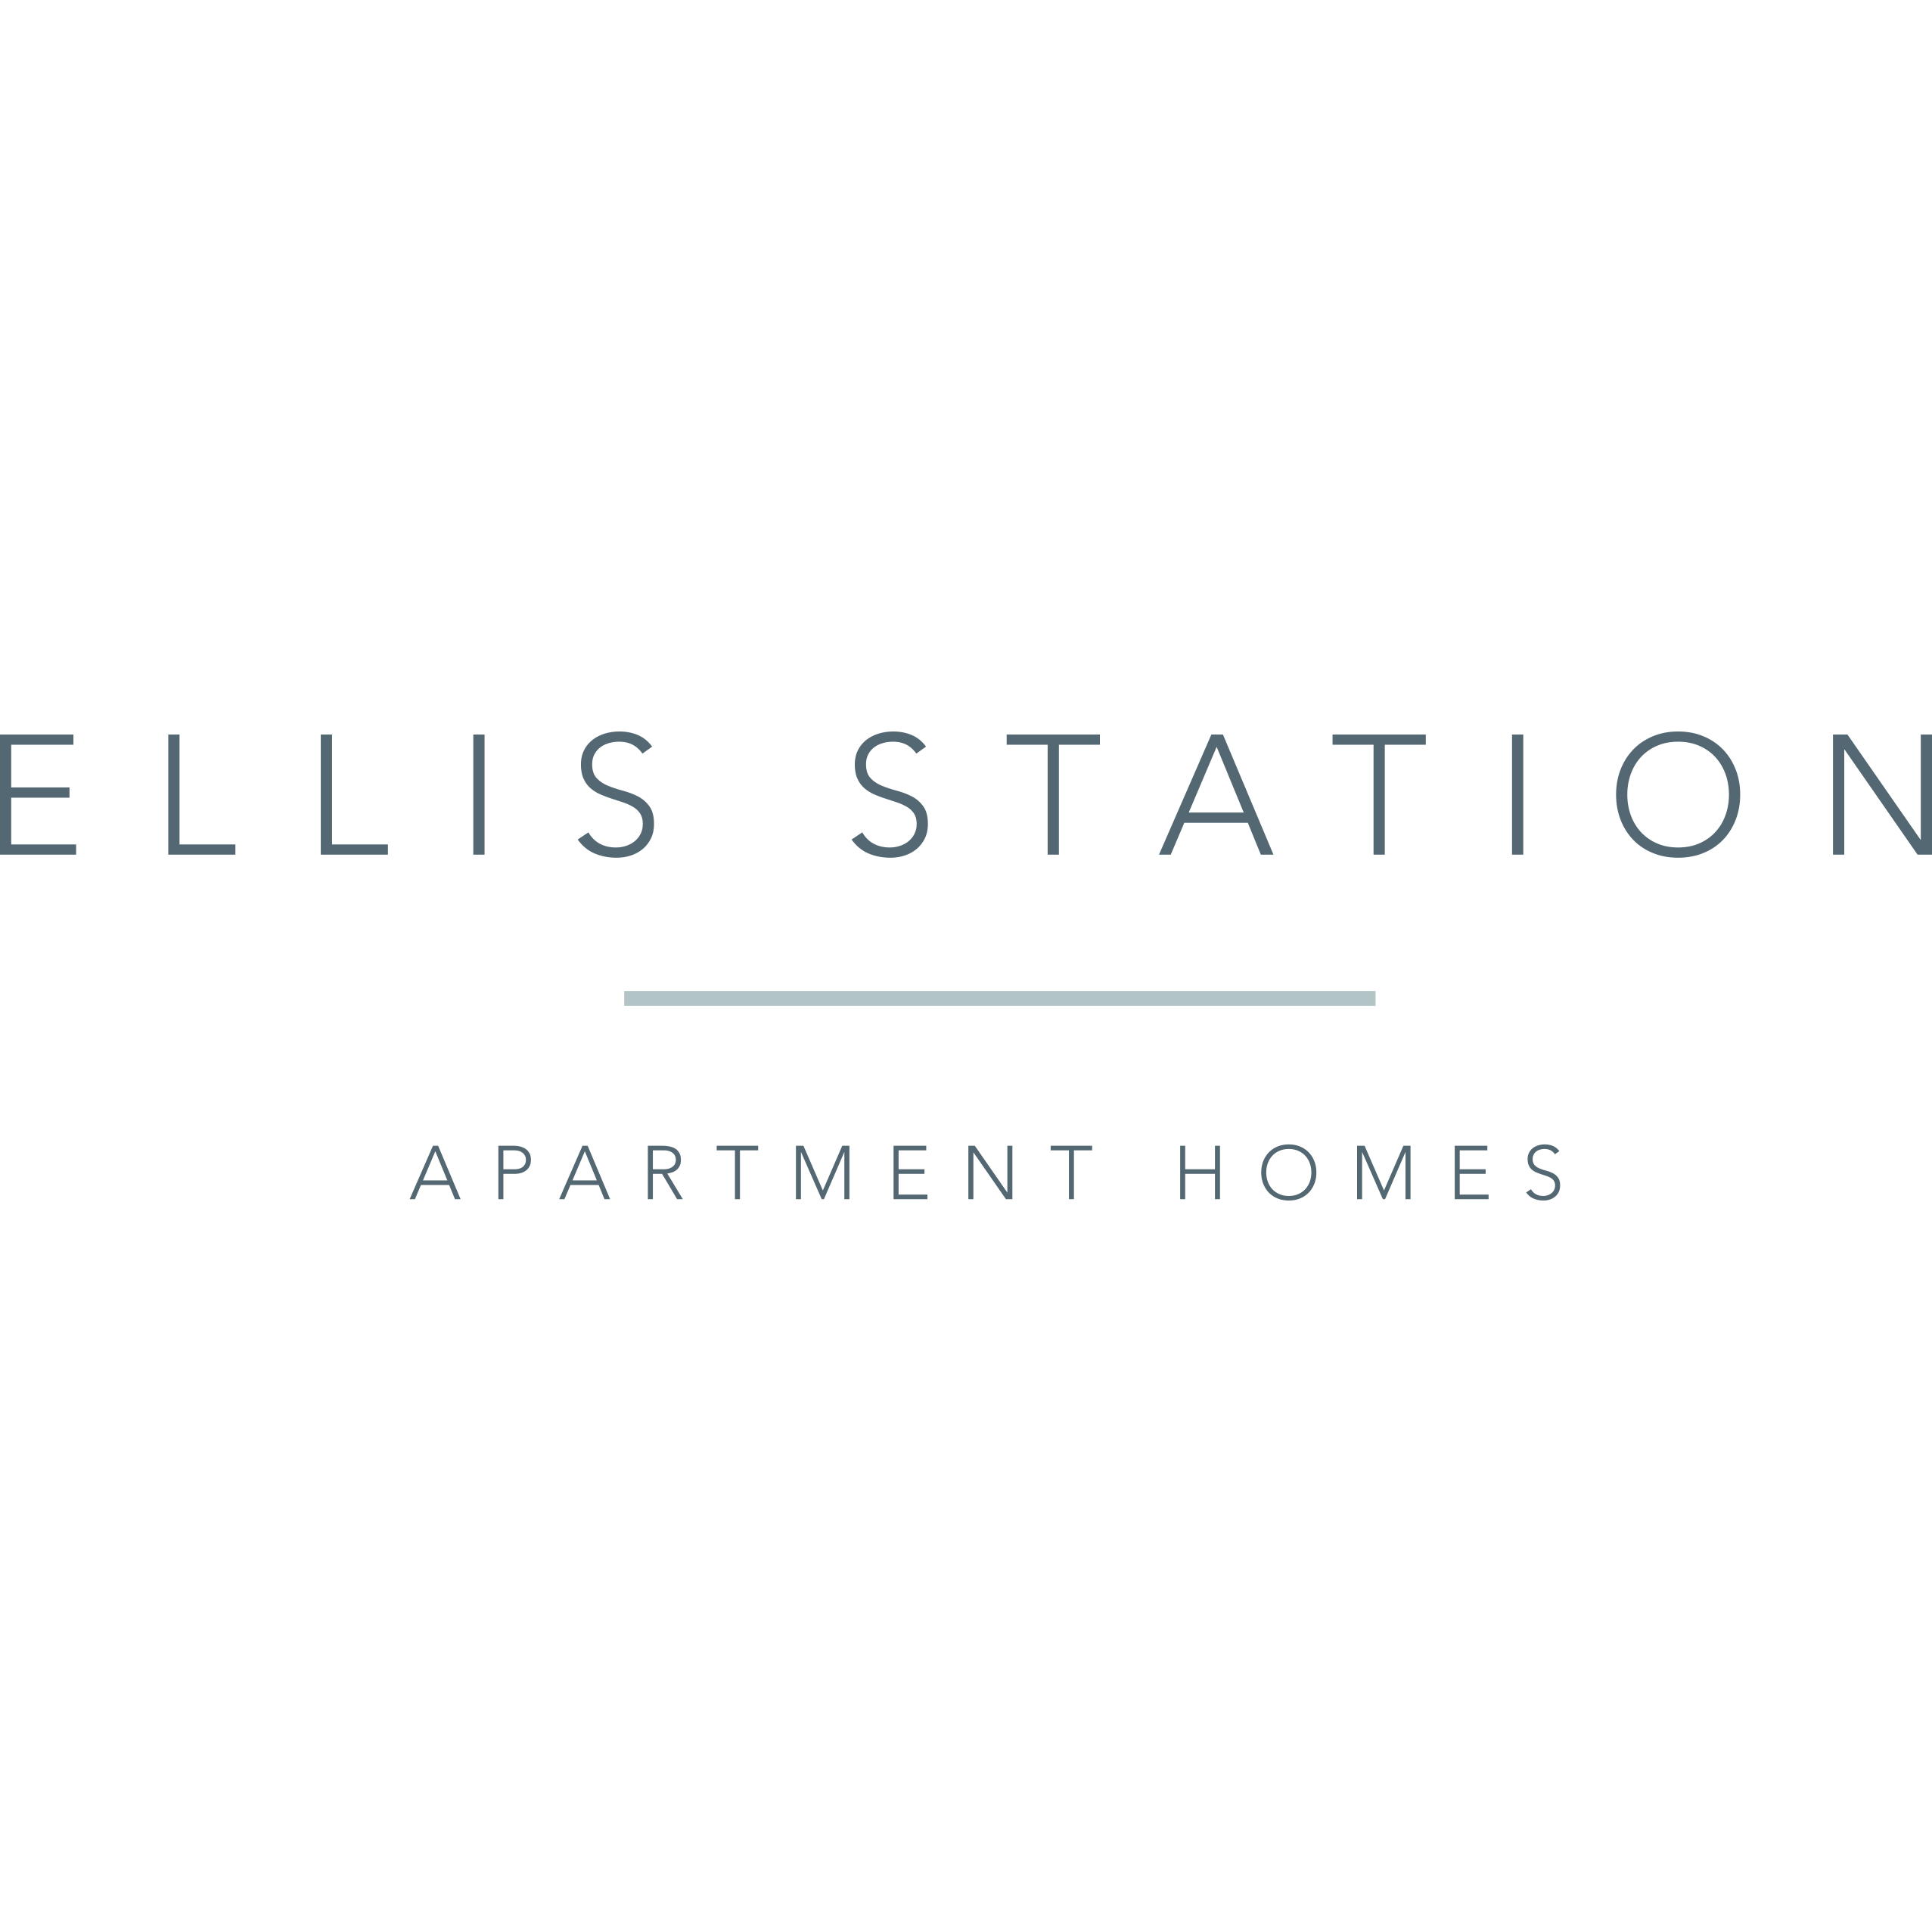 Ellis Station